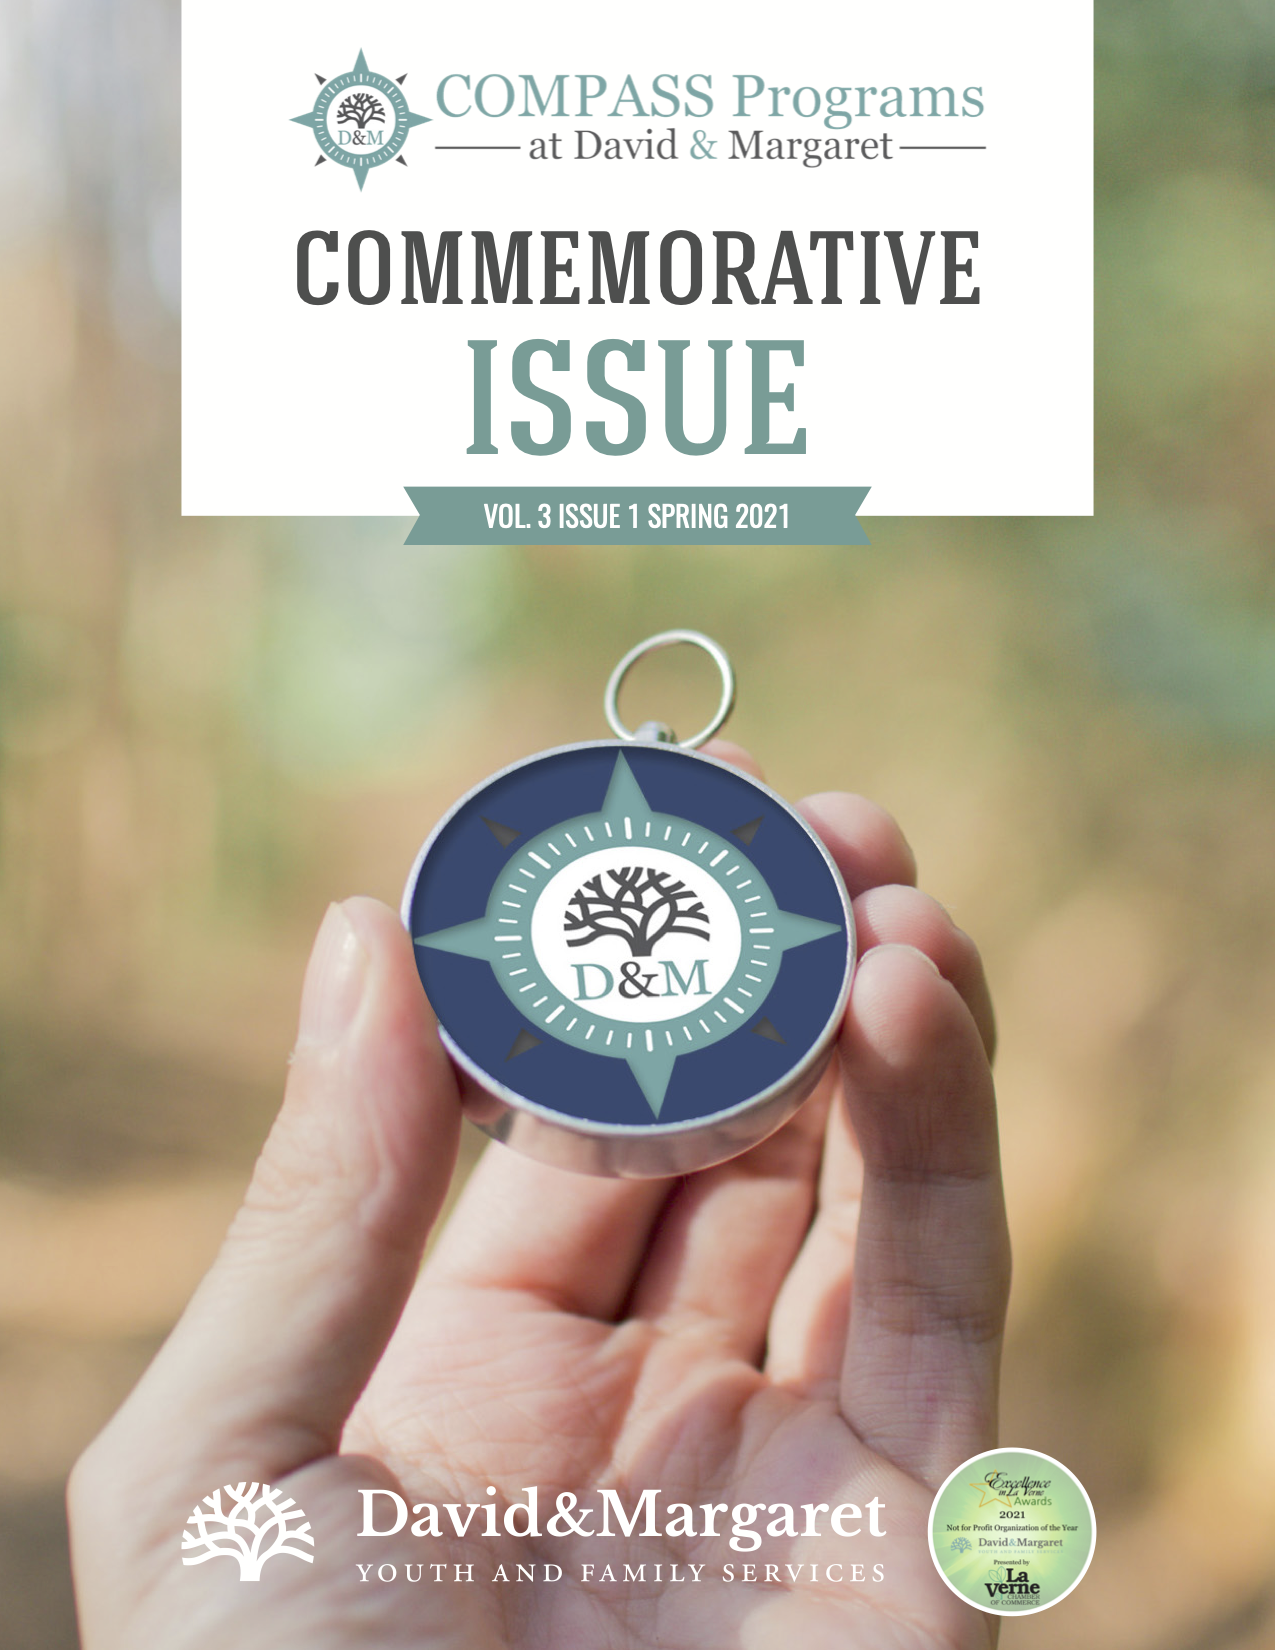 David & Margaret Quarterly Newsletter Vol. 3 Issue 1; COMPASS Programs Commemorative Issue